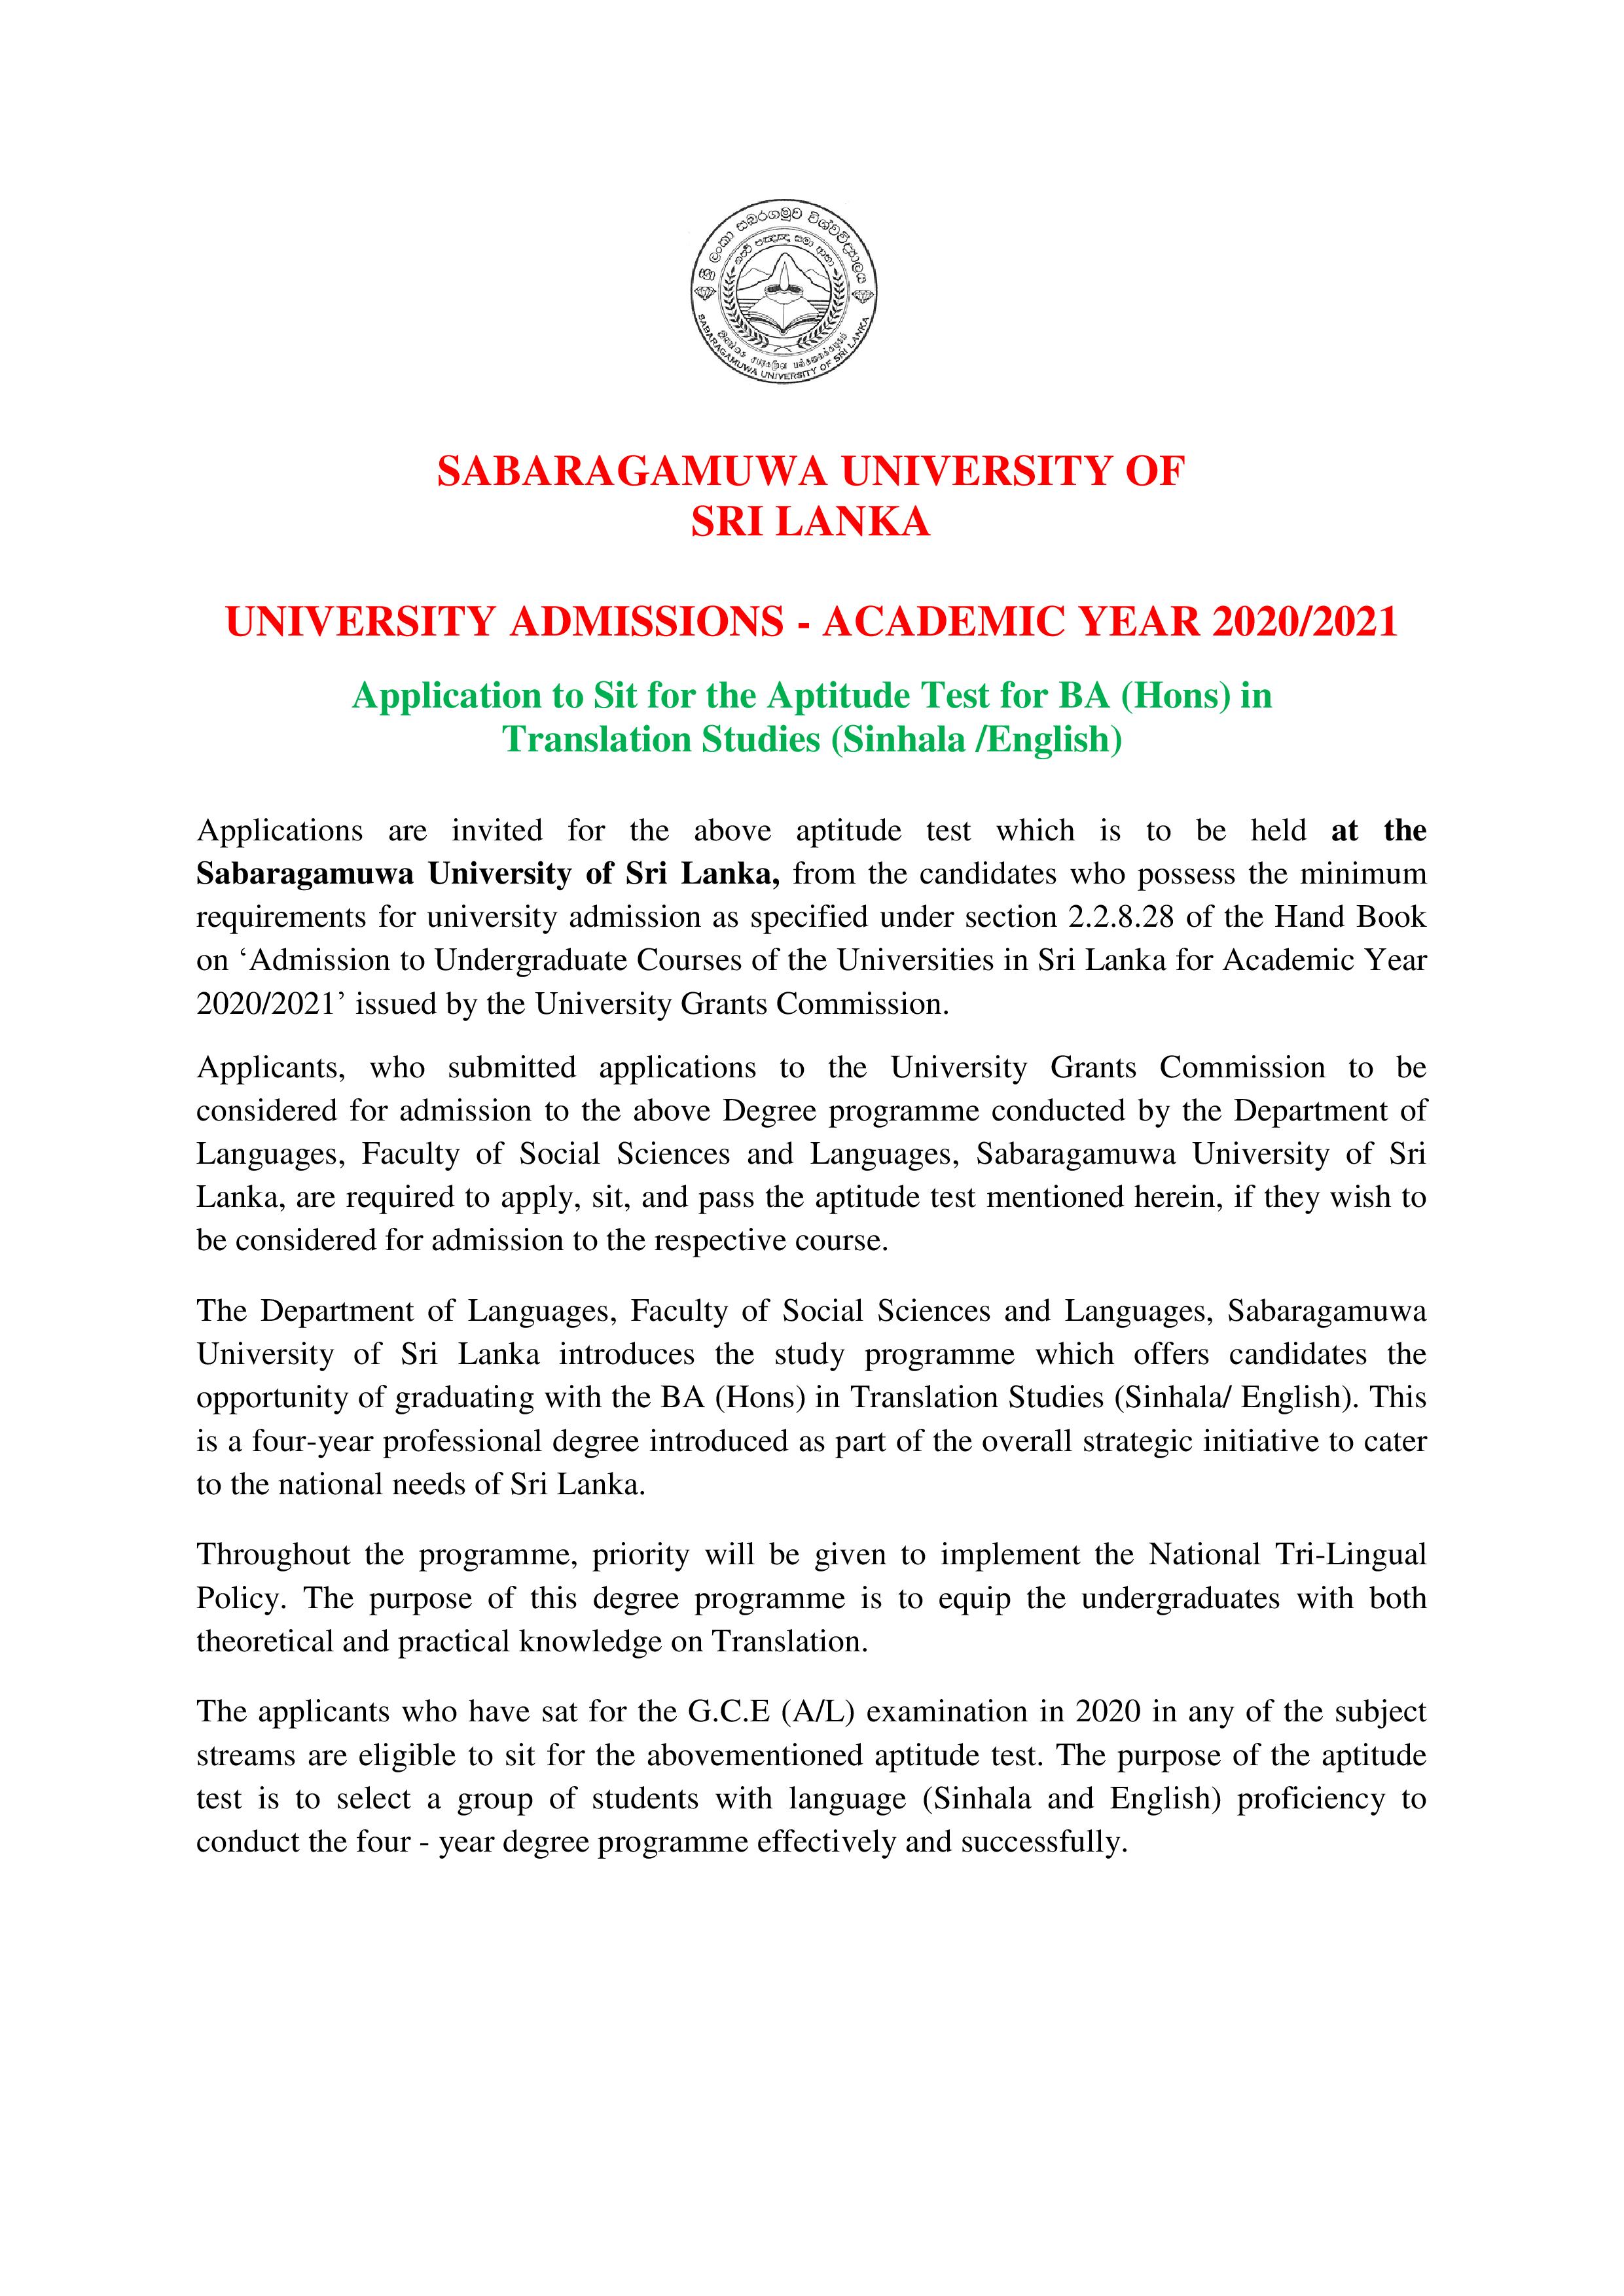 ba-hons-in-translation-studies-aptitude-application-2020-2021-sabaragamuwa-university-study